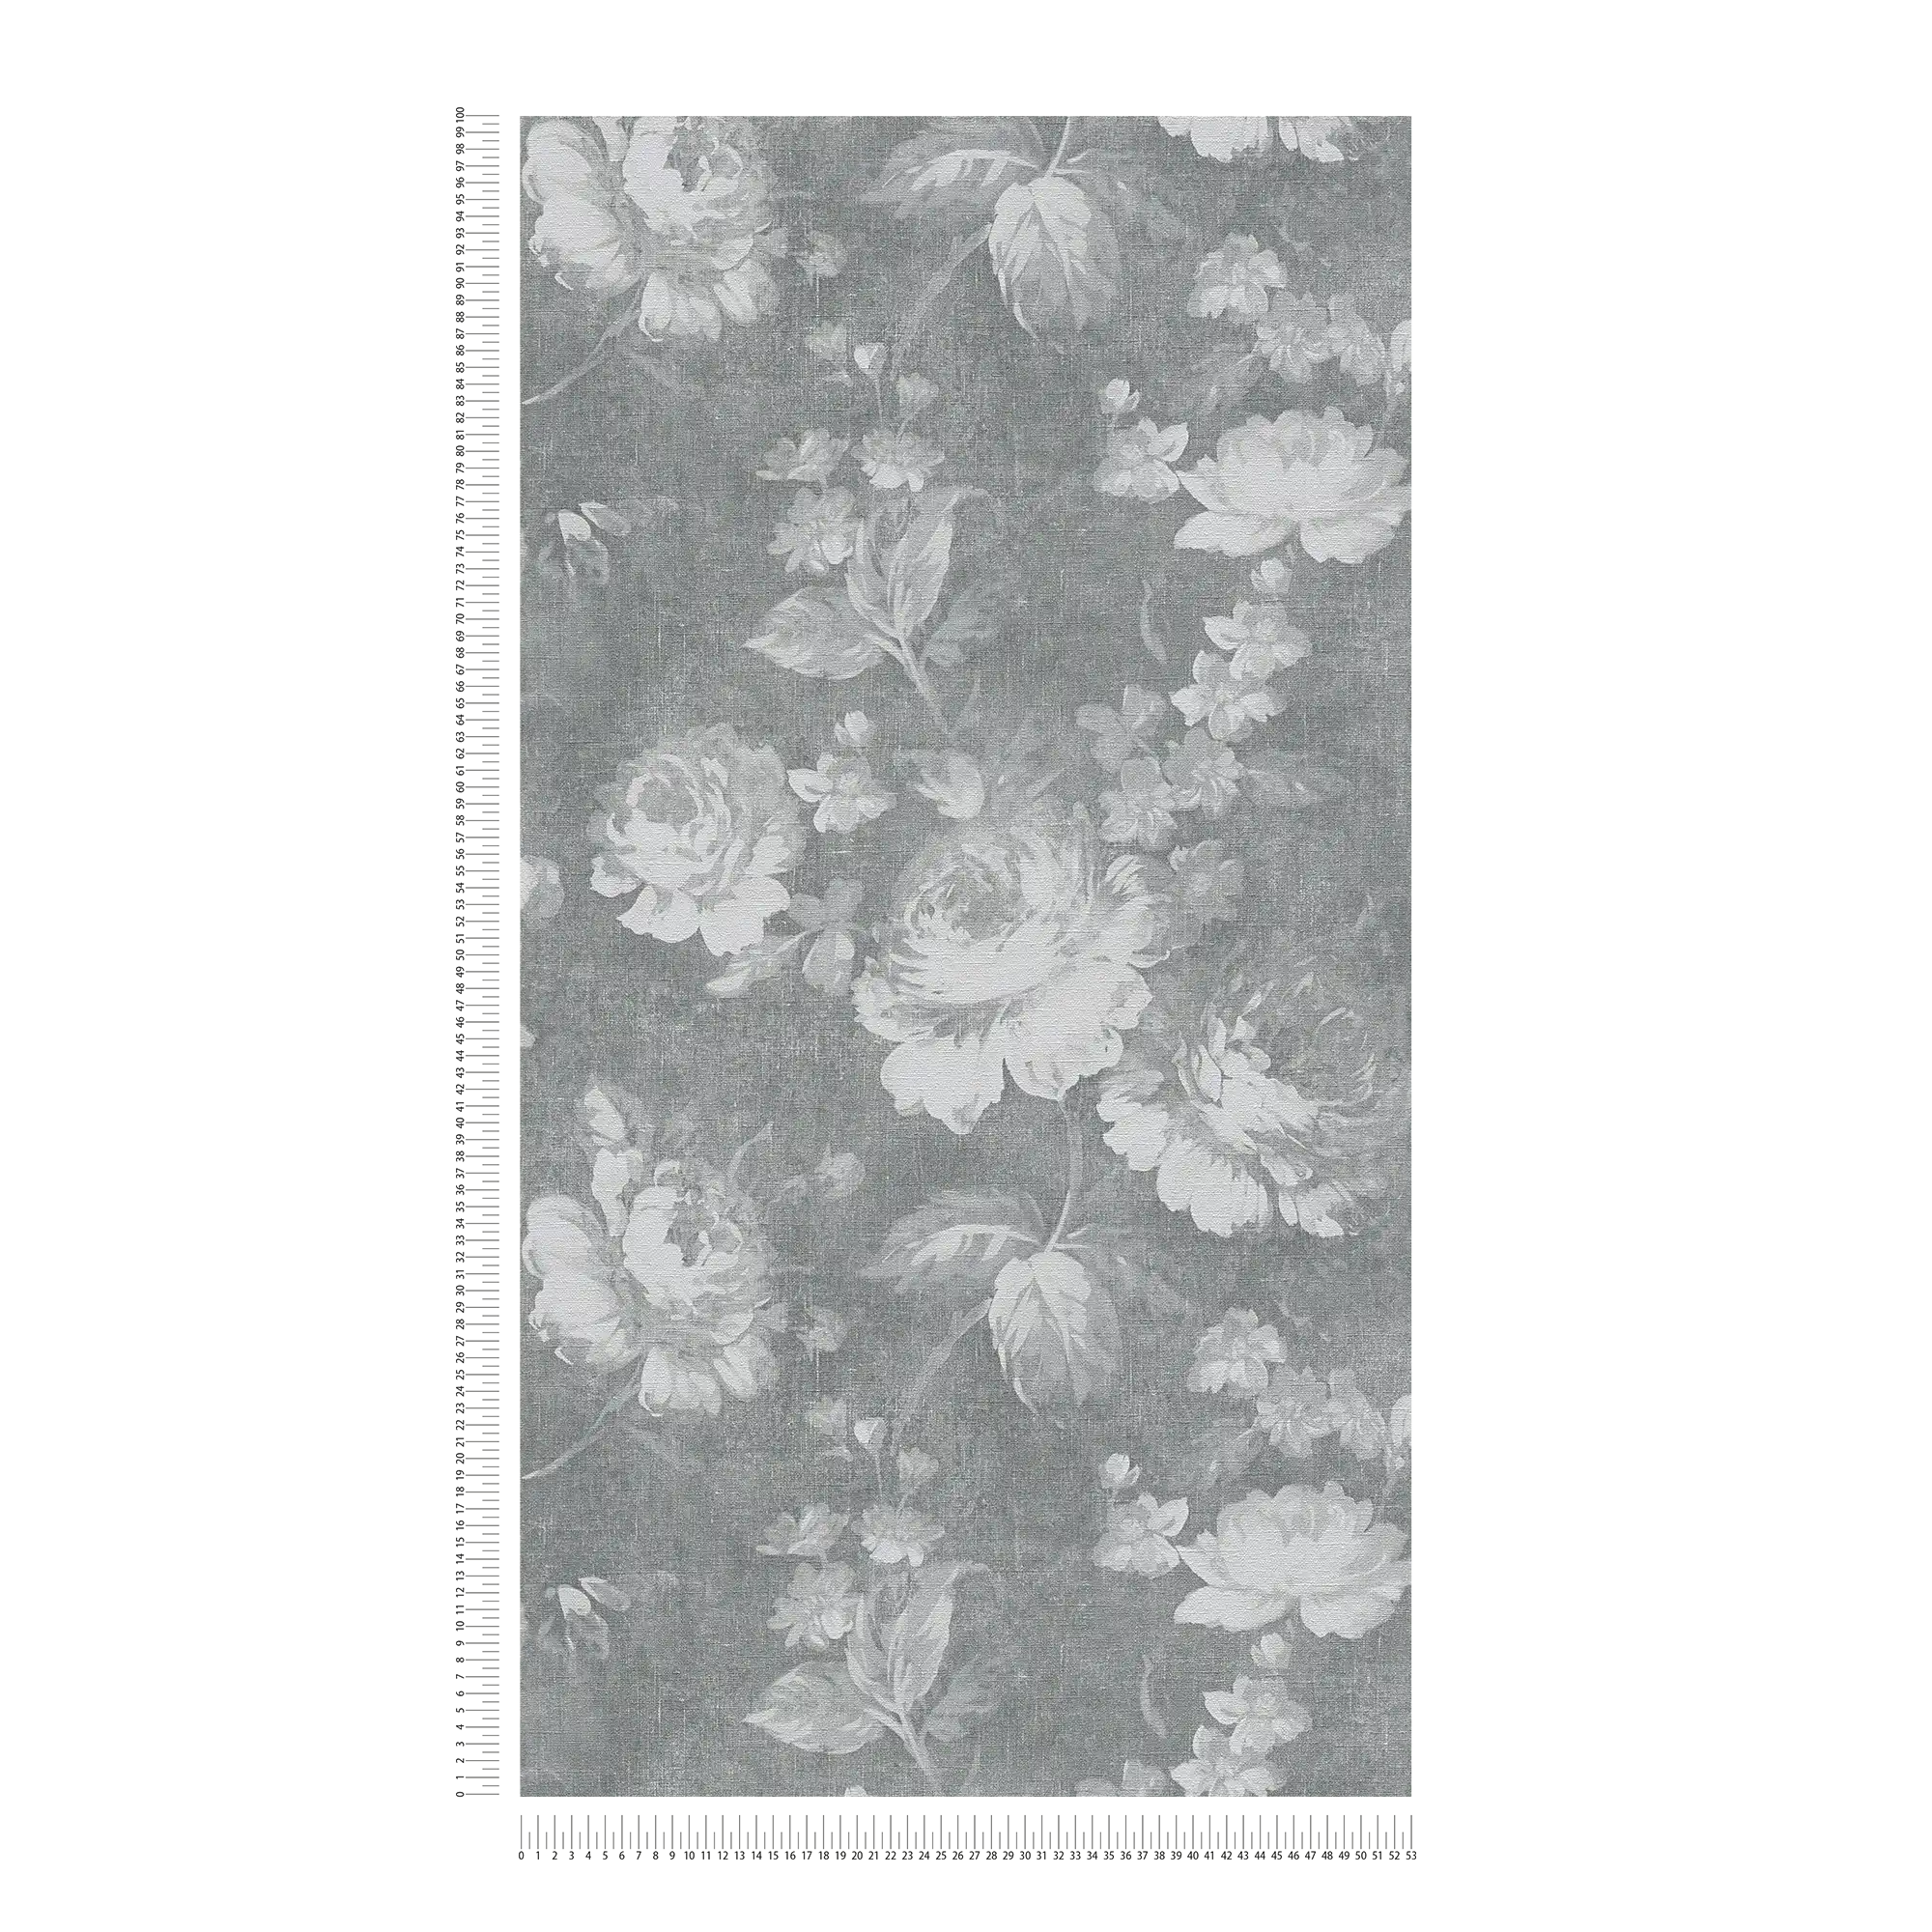             Blumentapete mit Vintage Rosenmuster – Grau
        